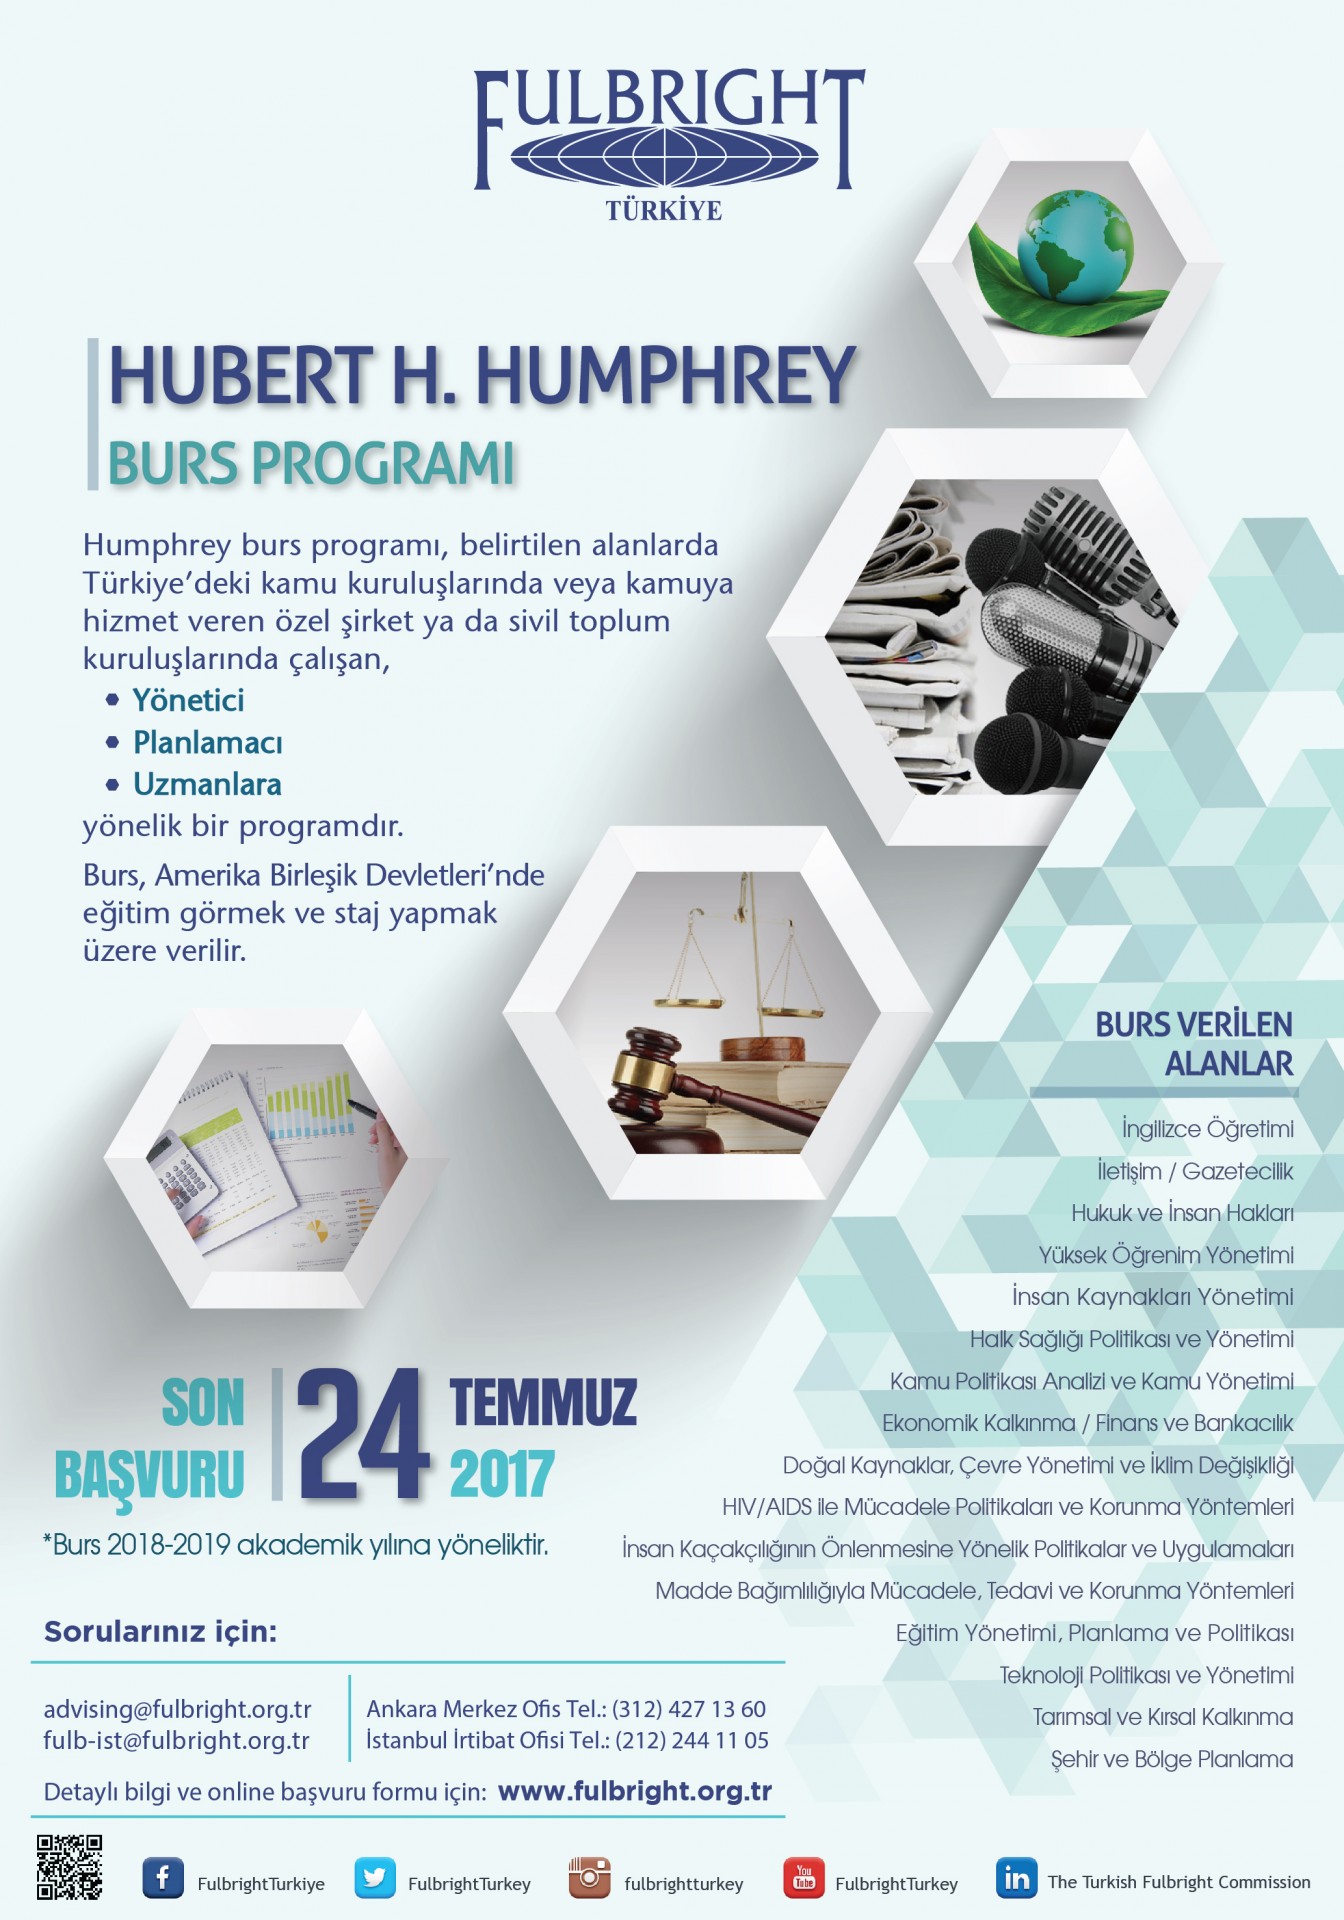 Fulbright’dan Hubert H. Humphrey Burs Programı 1